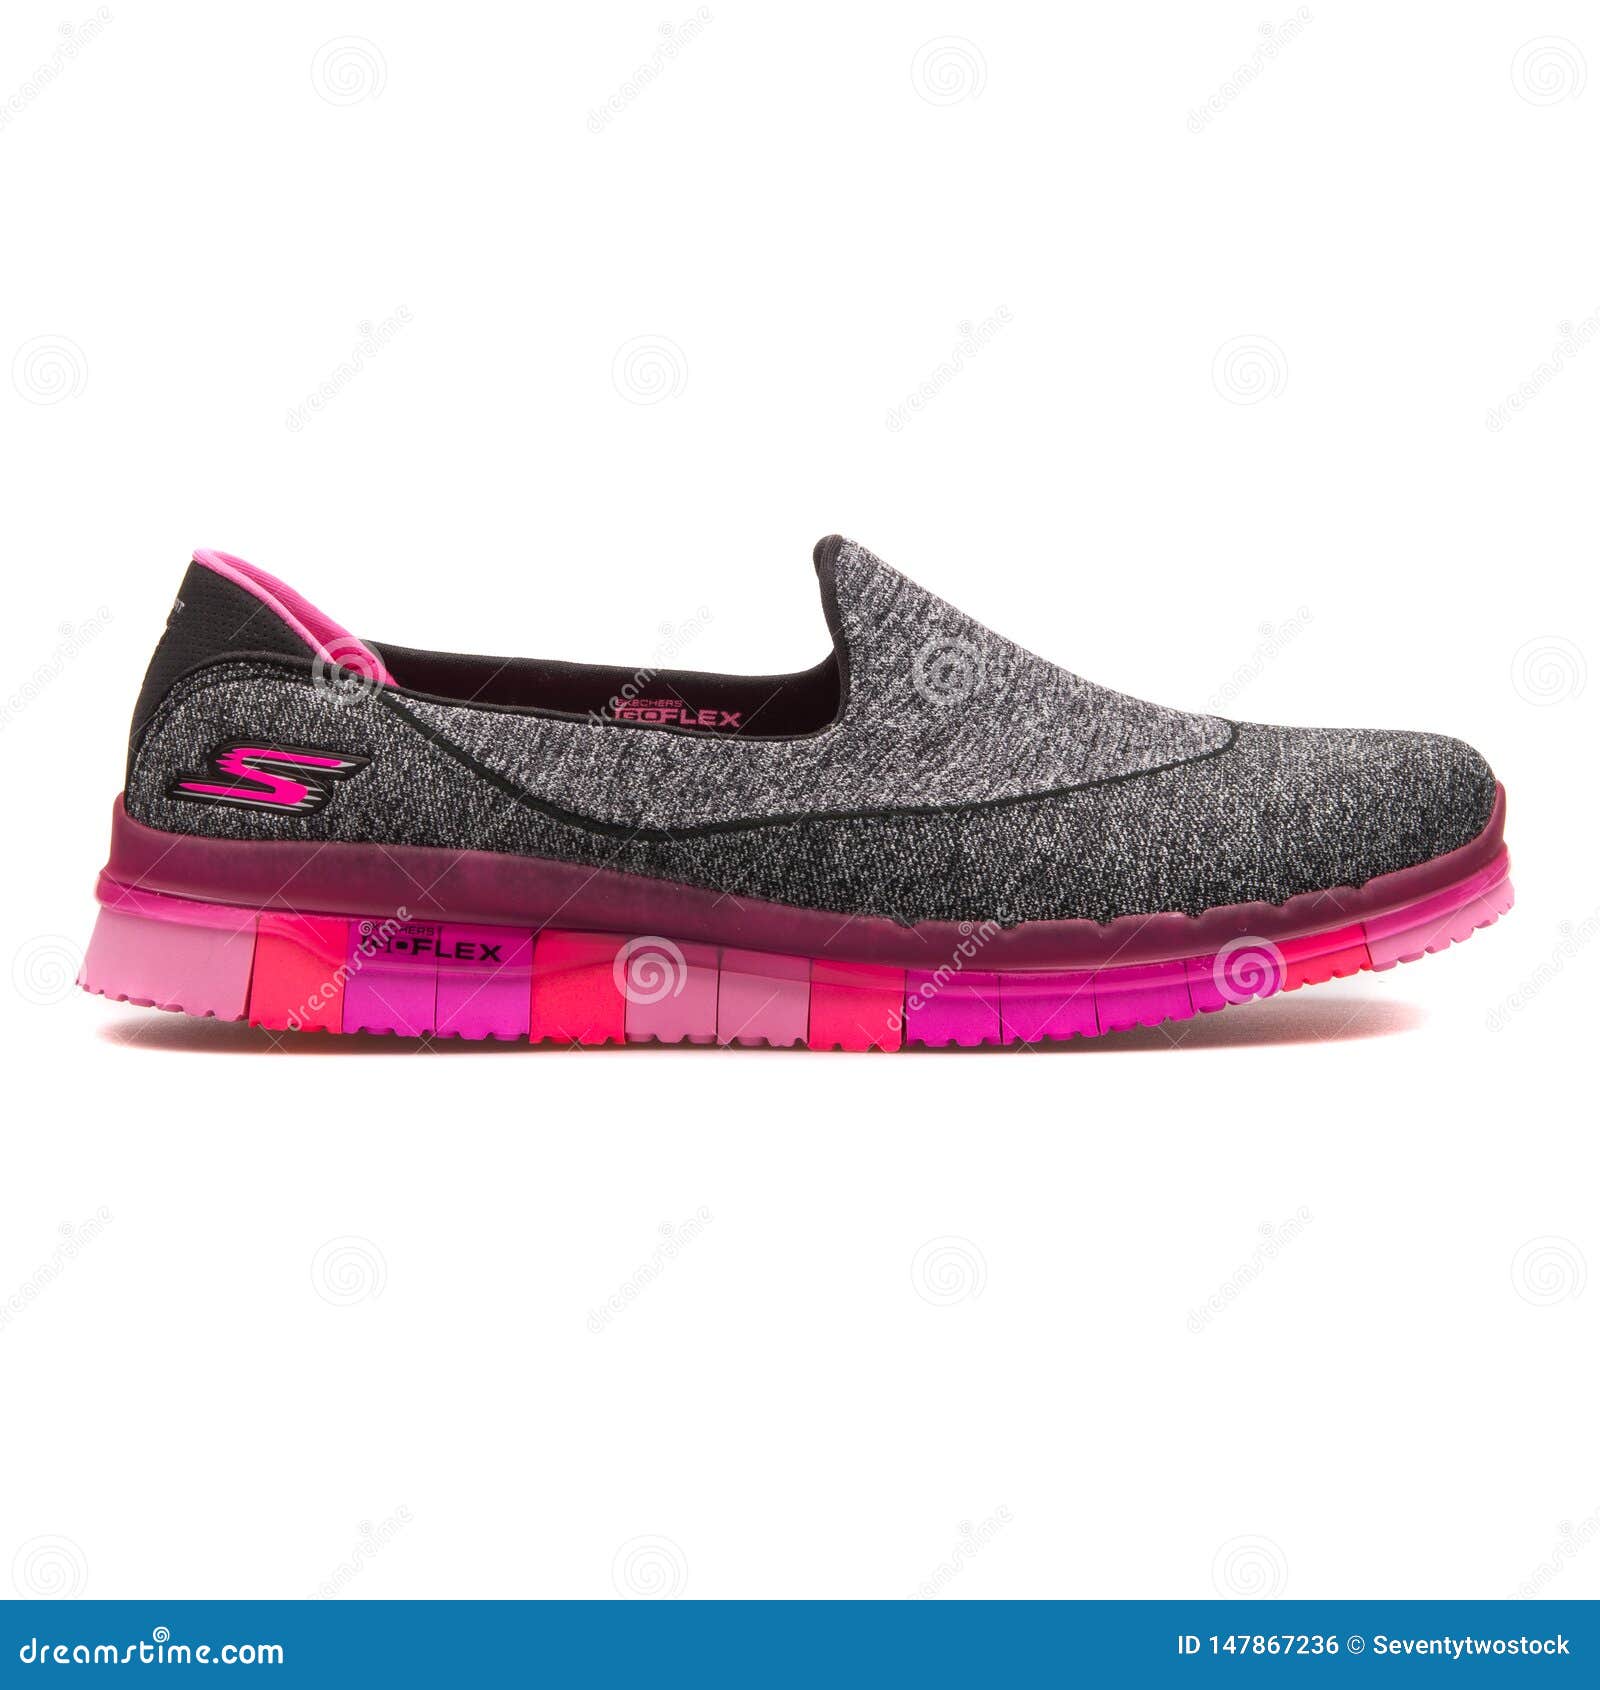 Skechers Go Flex Black And Pink Sneaker 